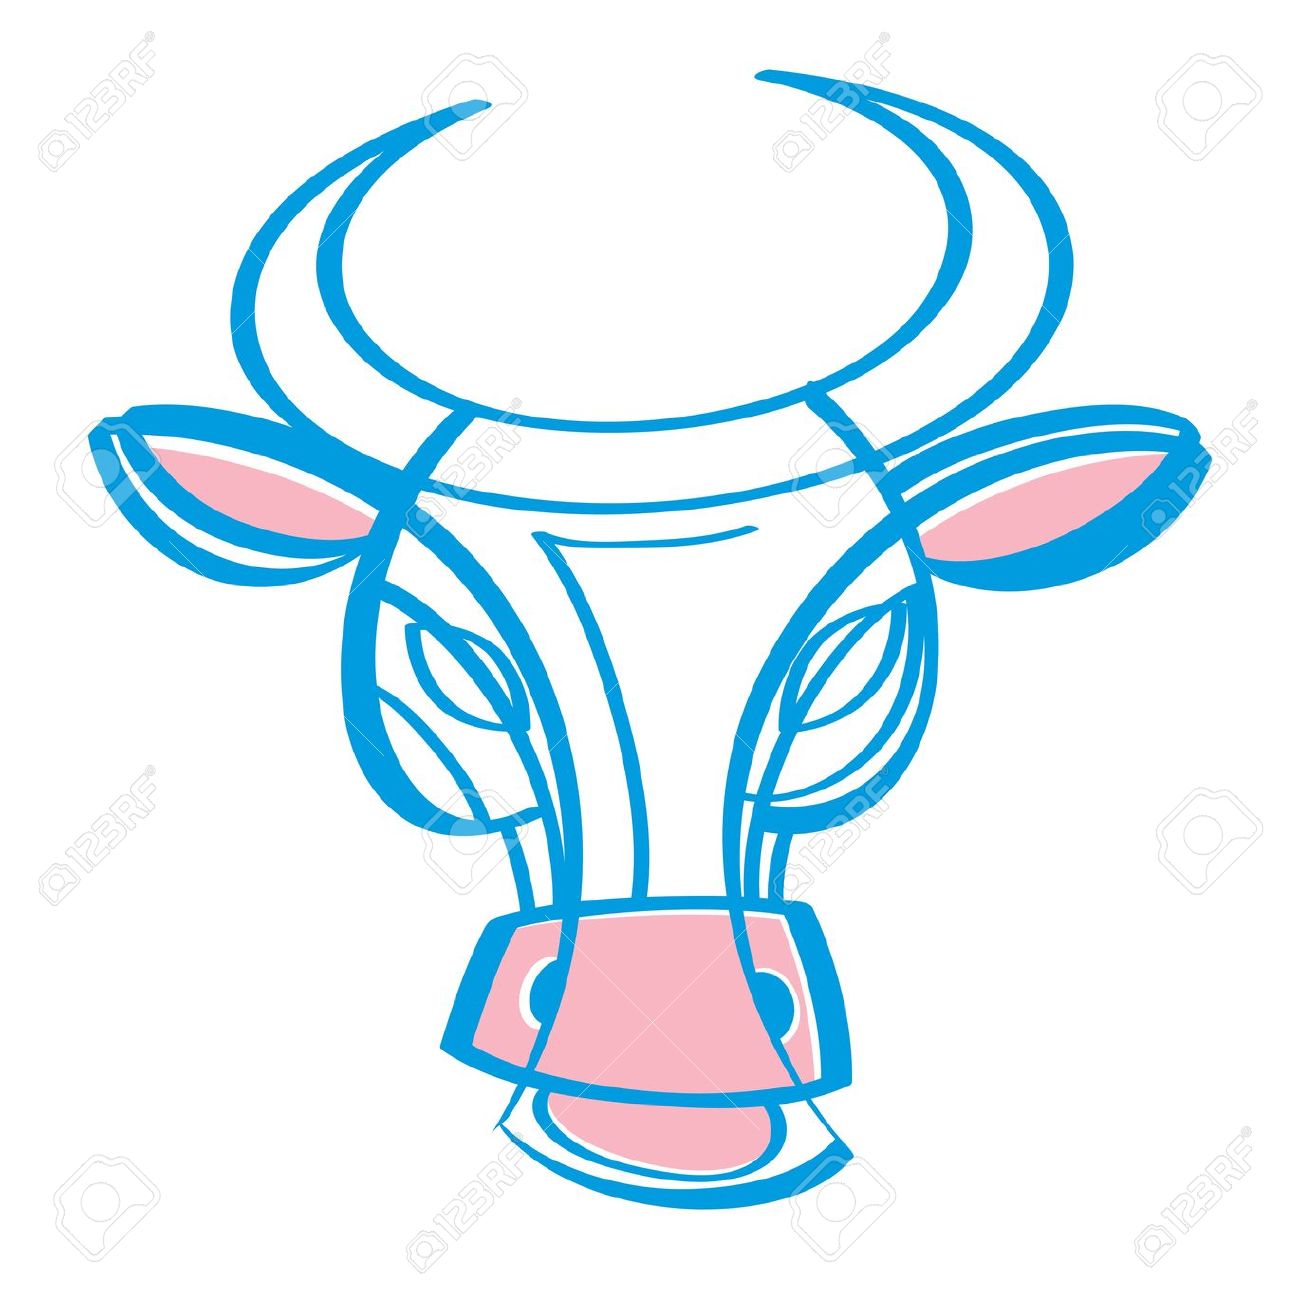 cow horns clipart - photo #35